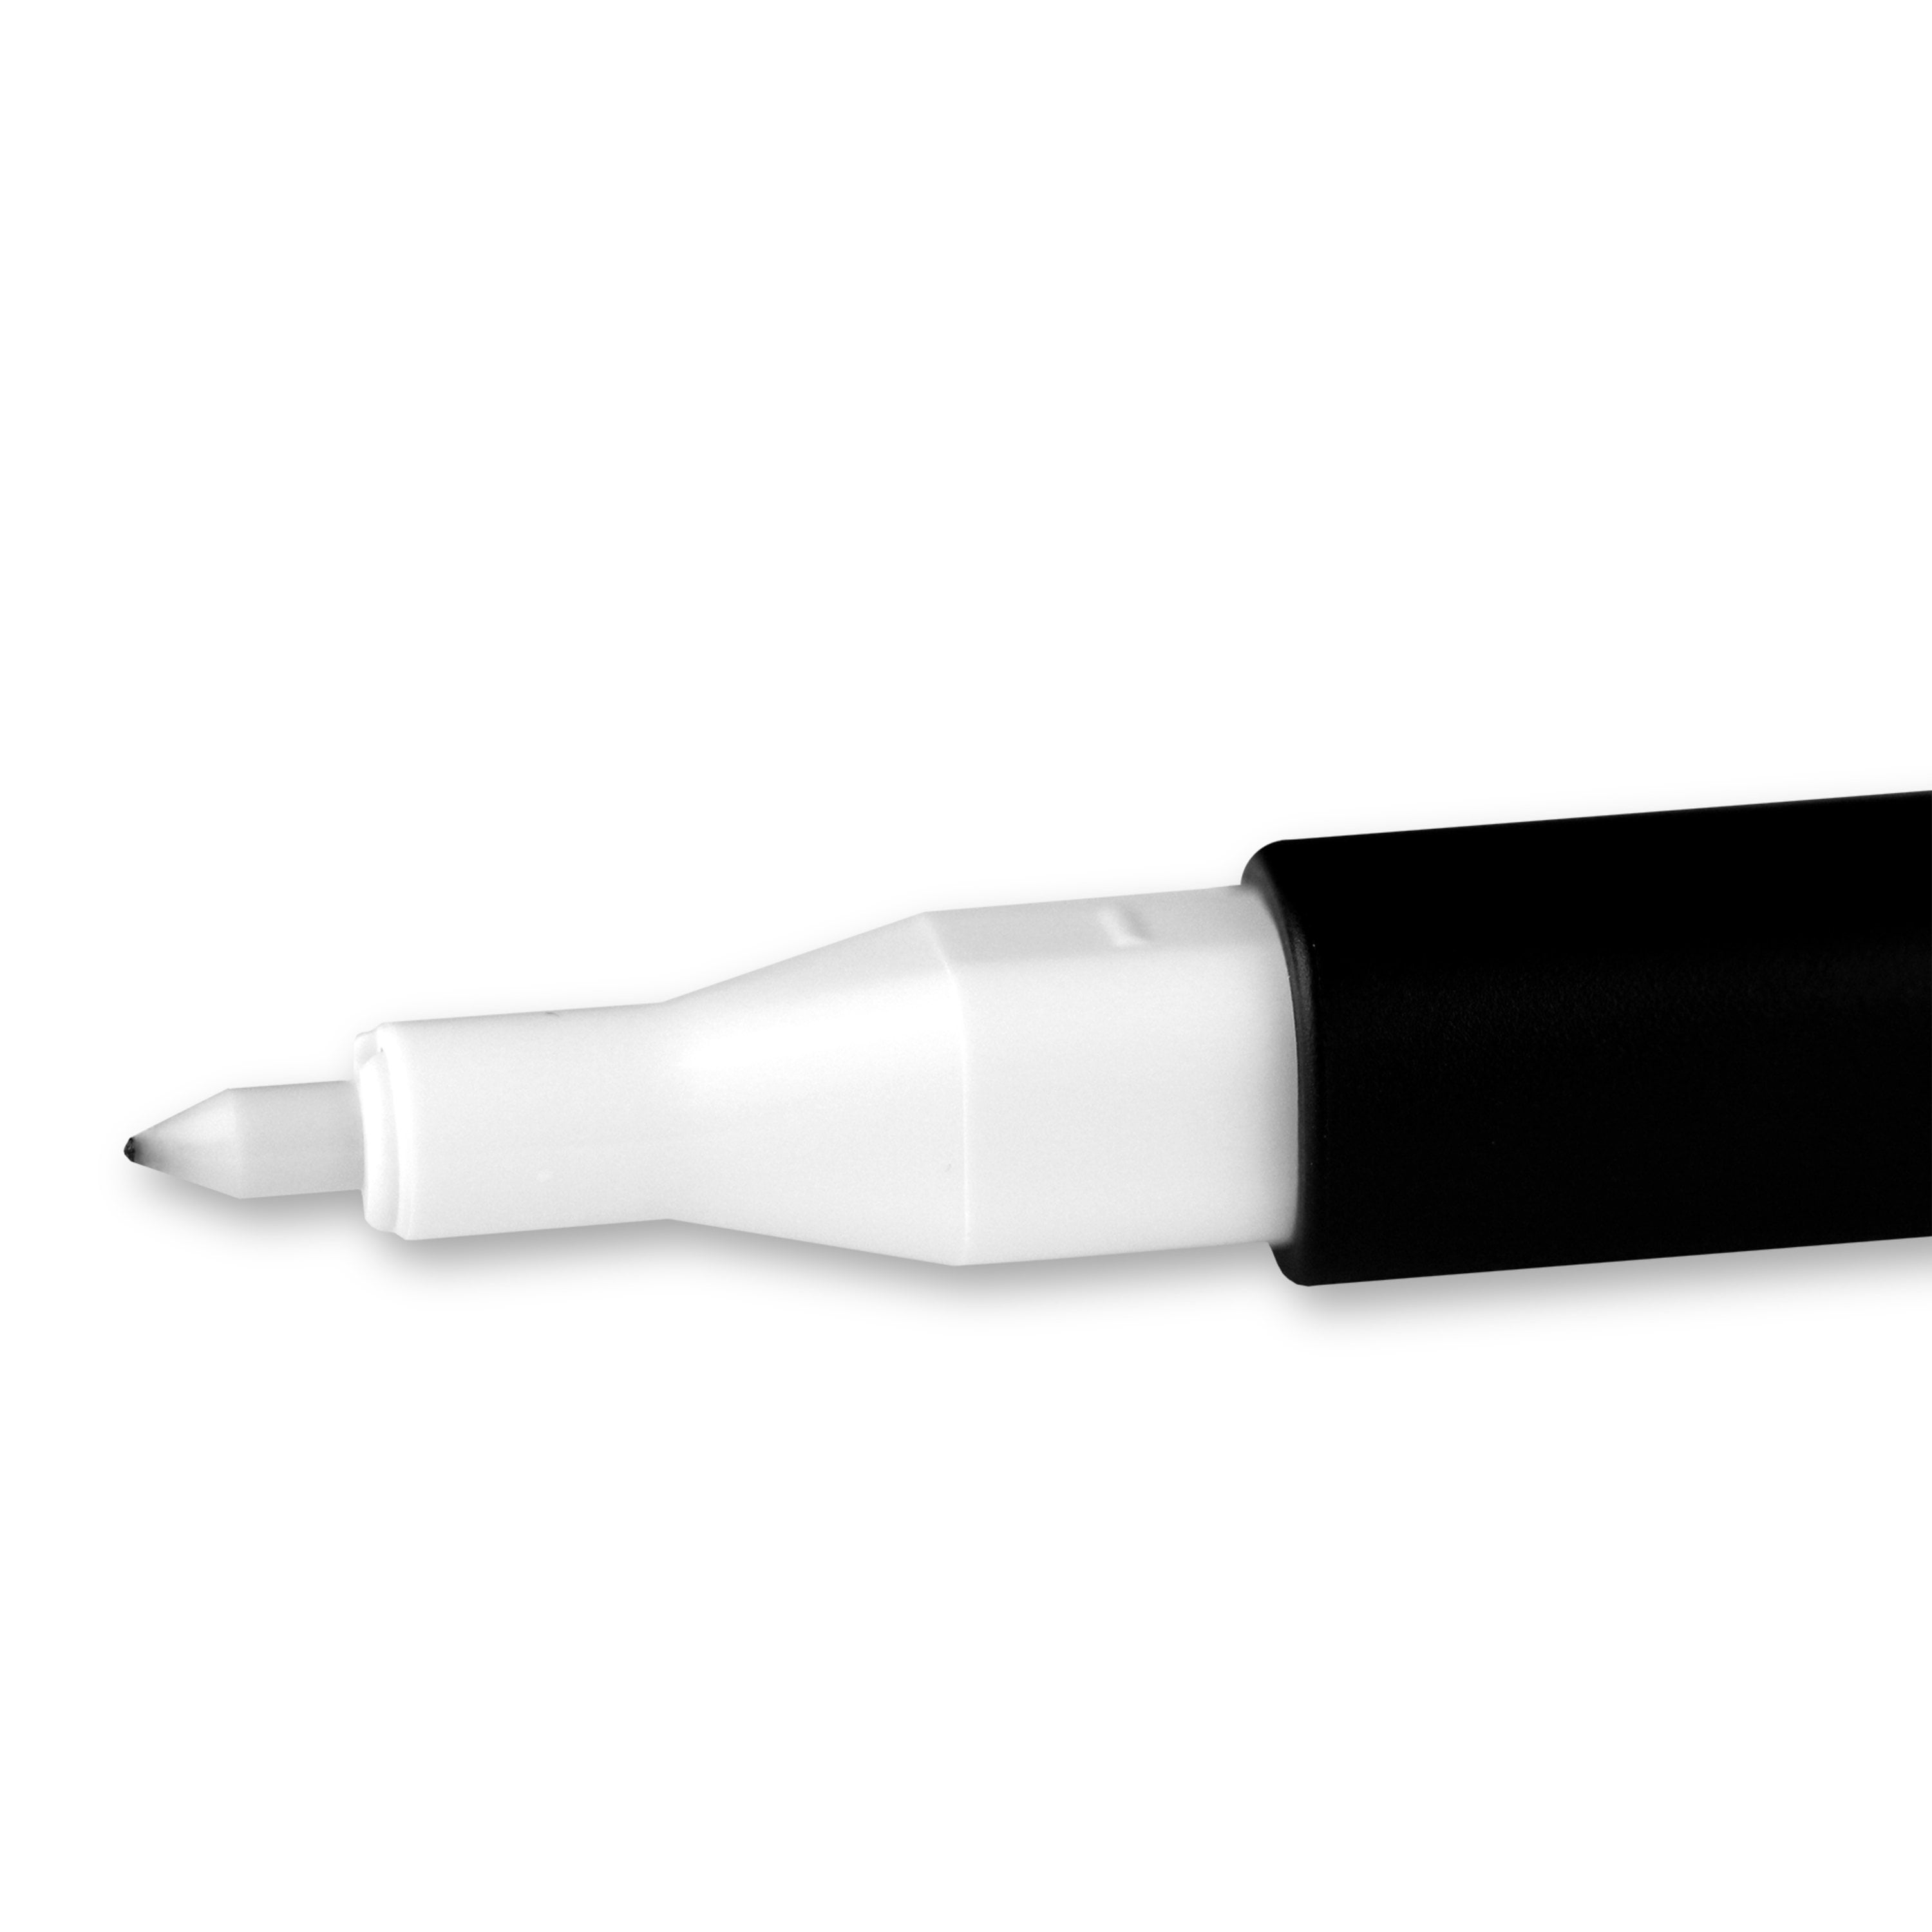 Uniball Emott Fineliner Pen 40 Pack, Office Supplies, School